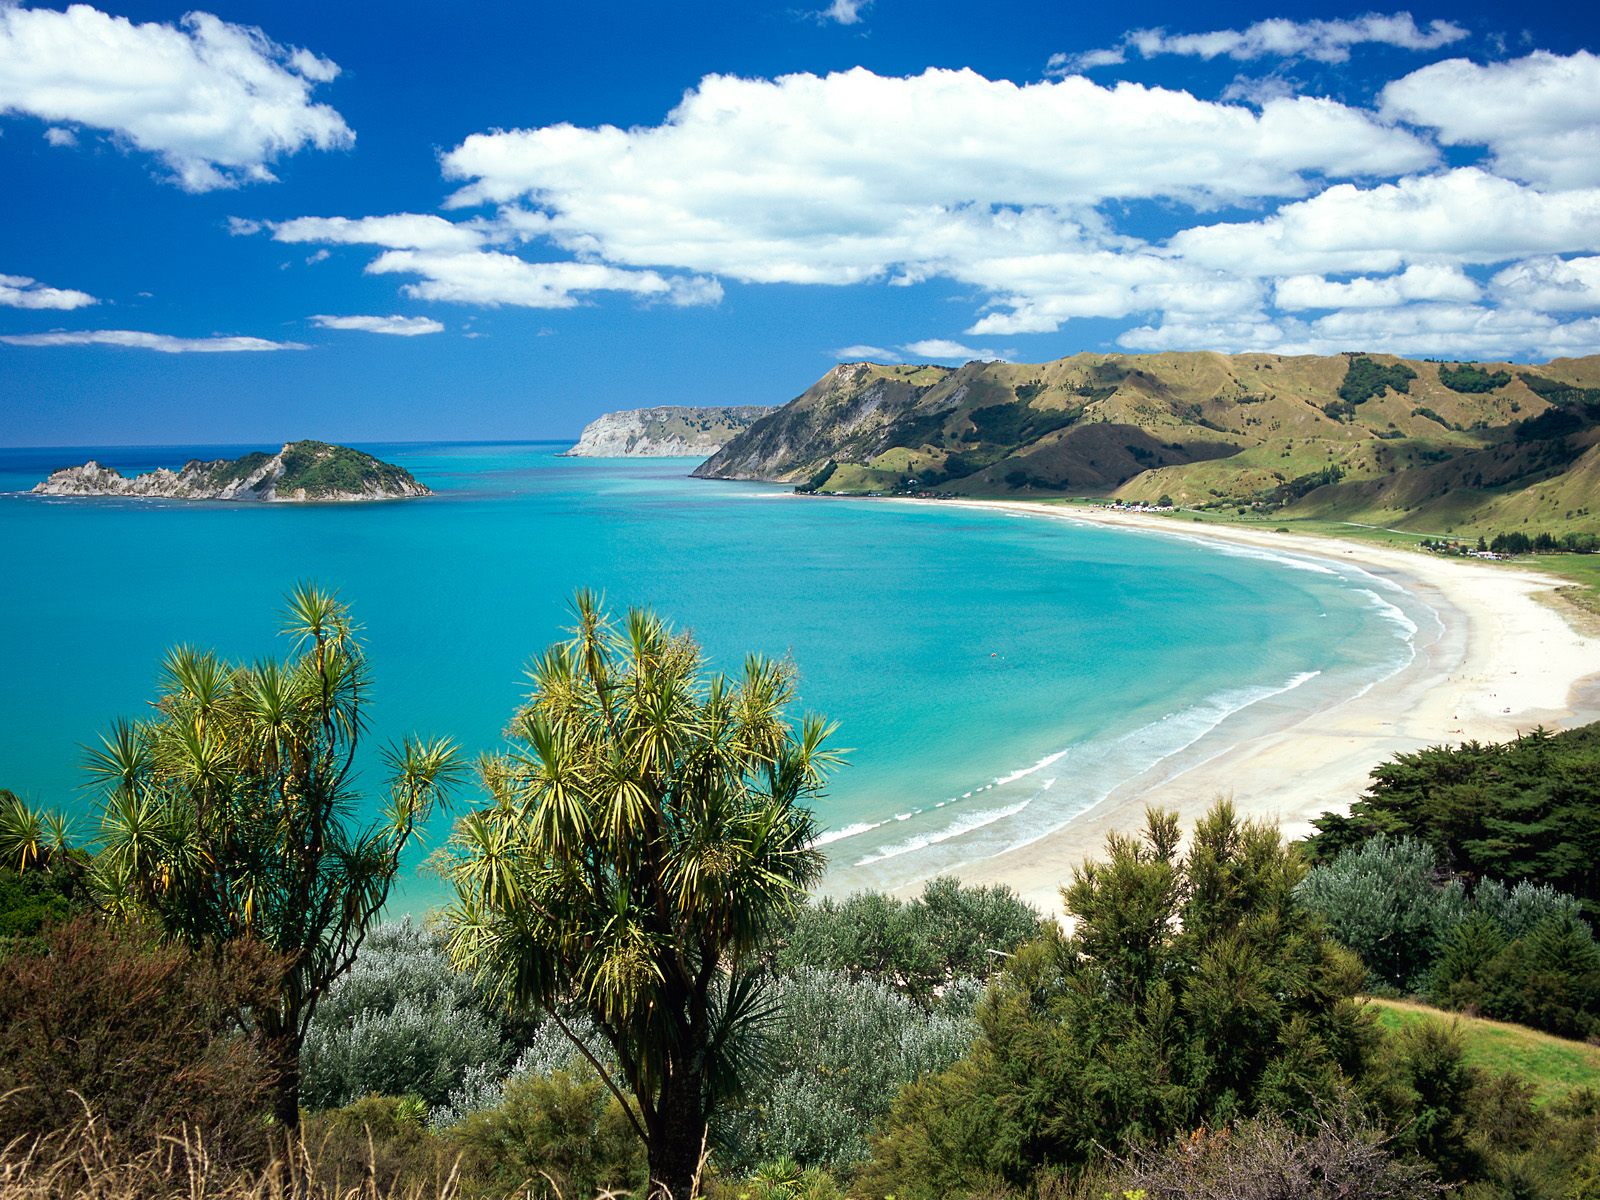 10. New Zealand